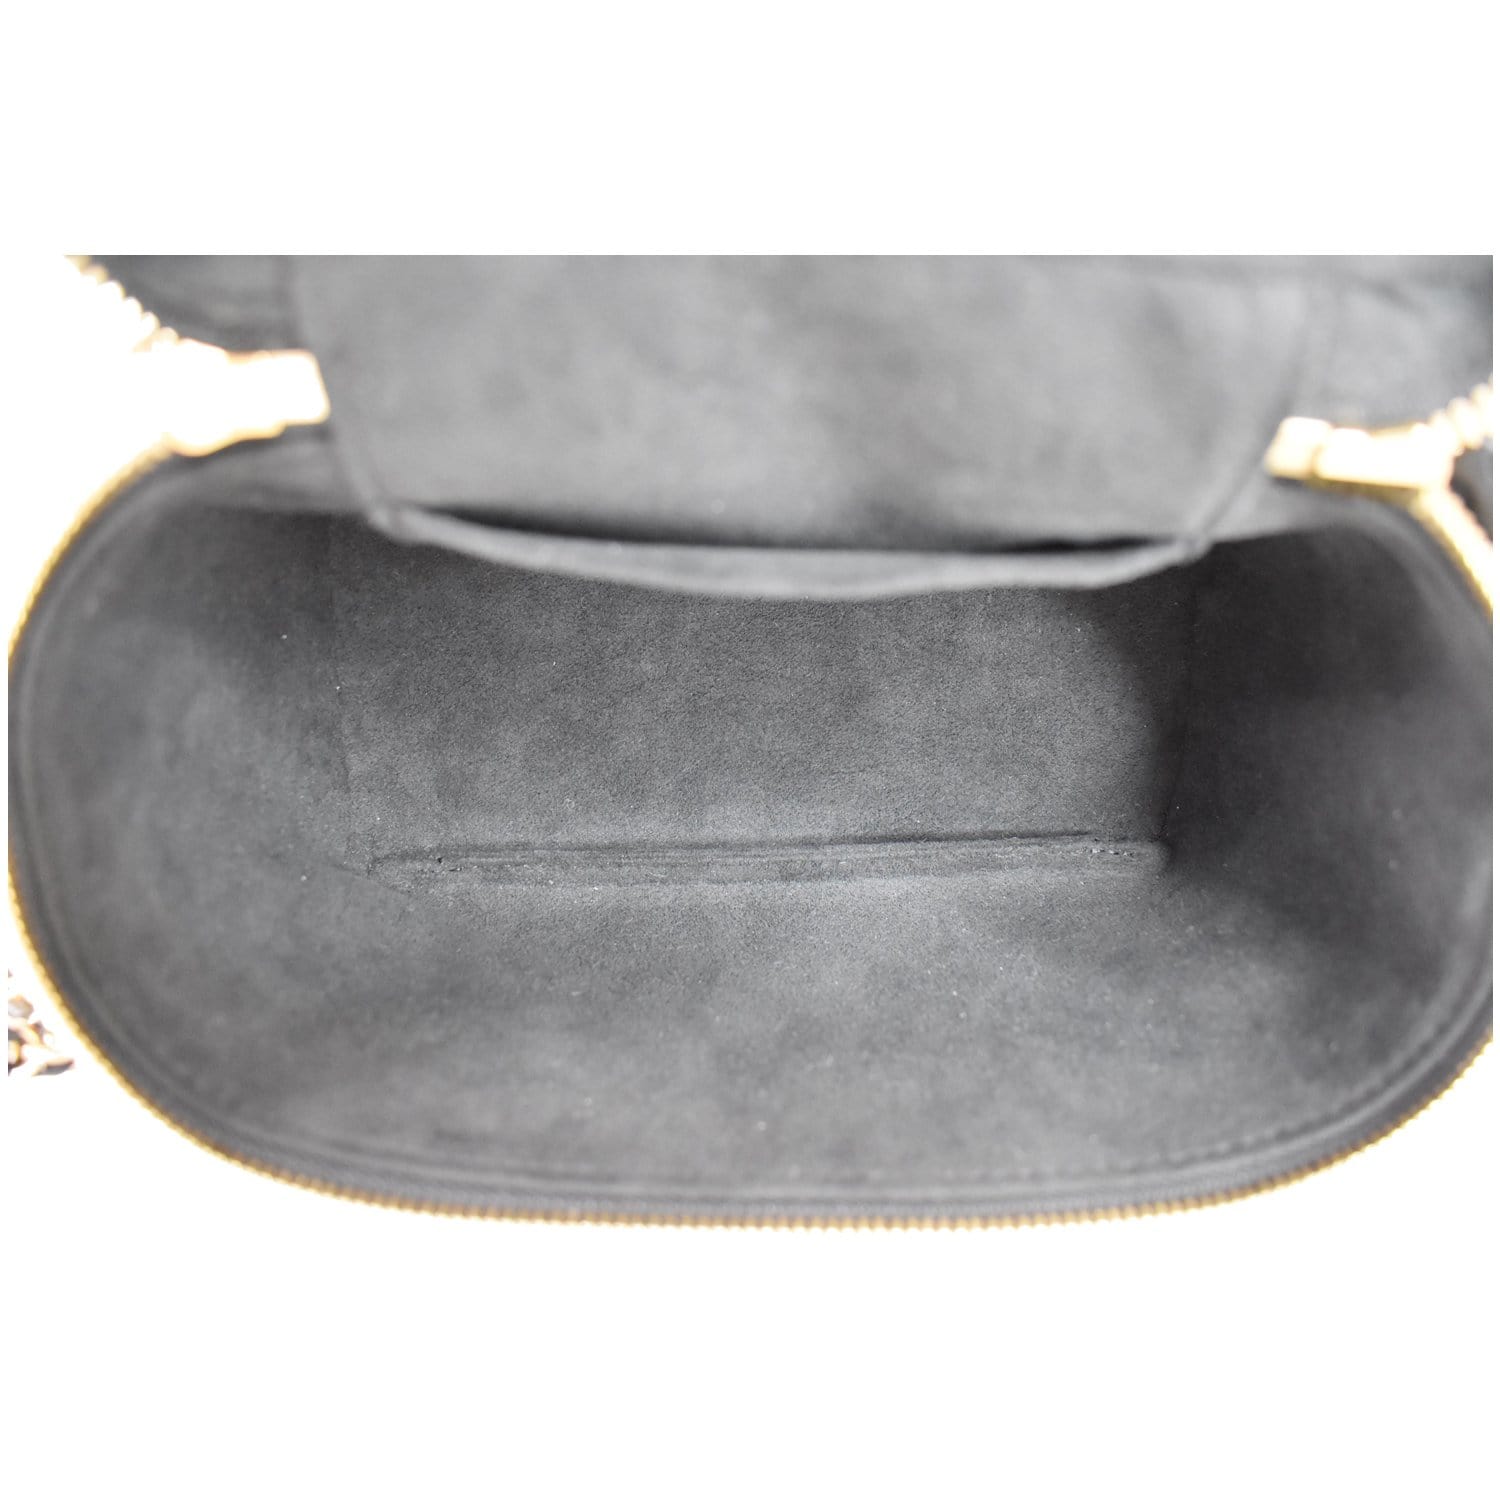 Louis Vuitton // Black Multi Monogram Game On Vanity PM Bag – VSP